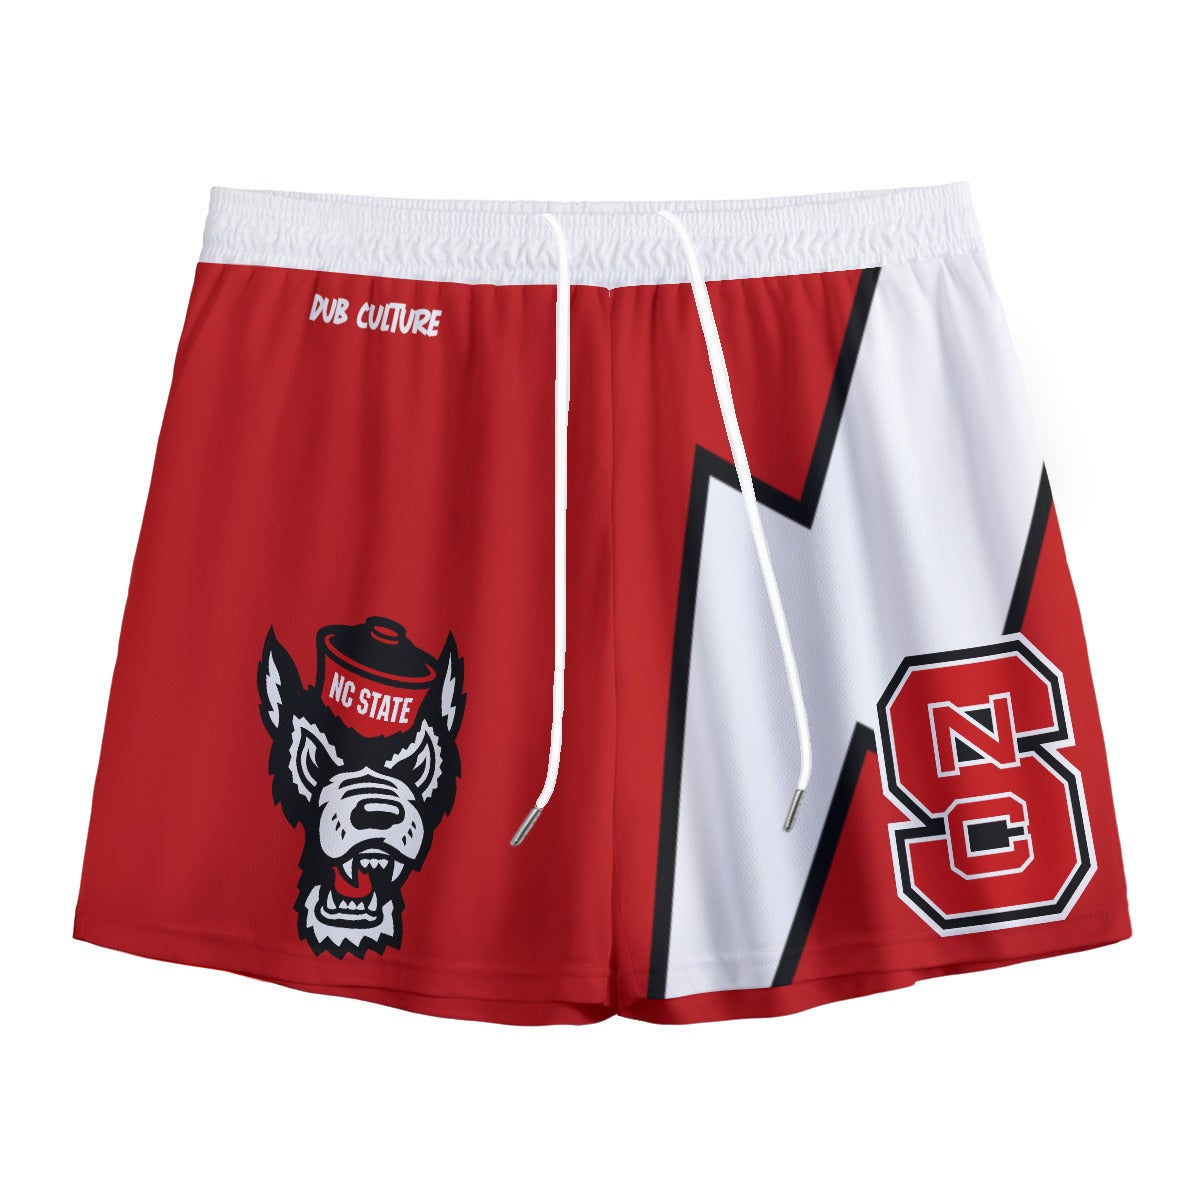 NC State Mesh Shorts